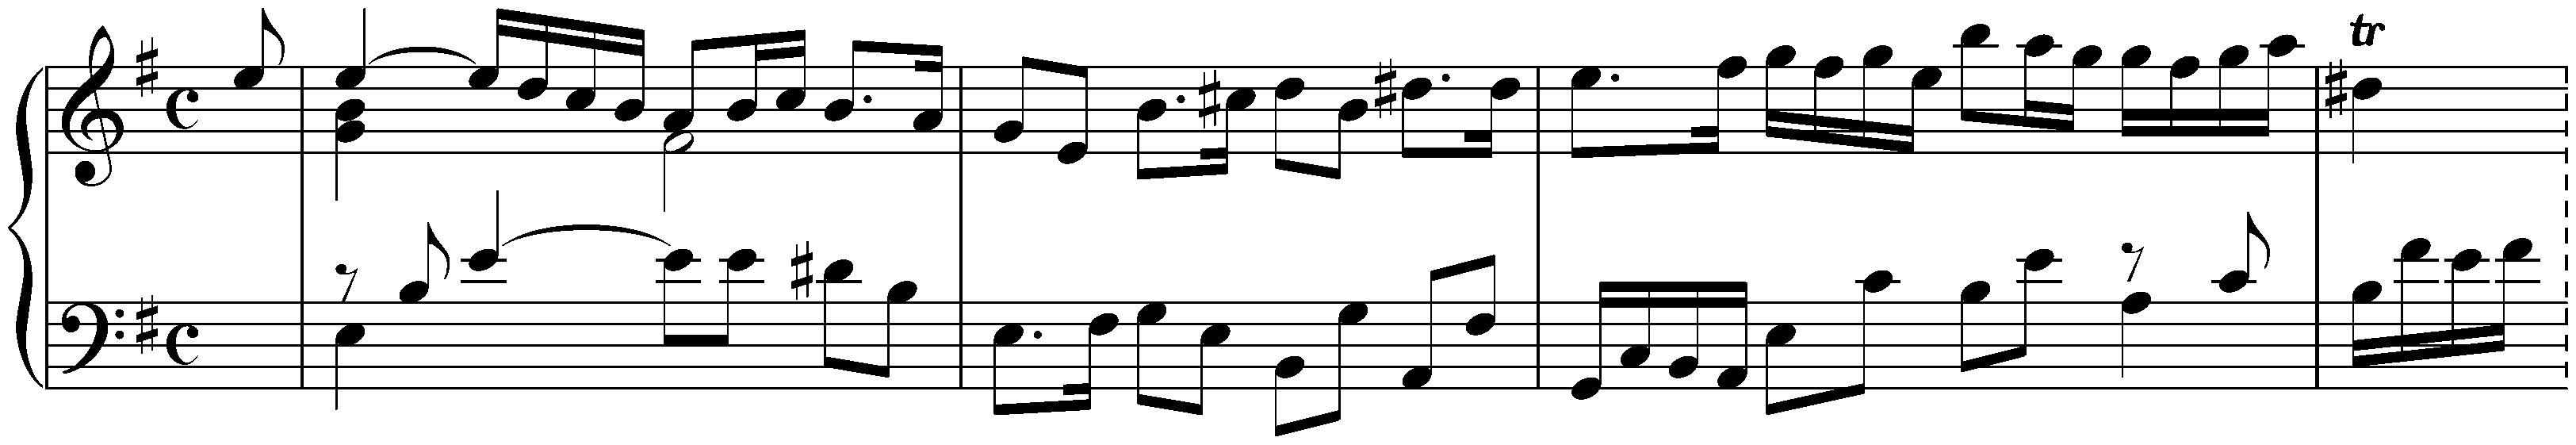 Suite in E minor, HWV 429; 2. Allemande (first version)